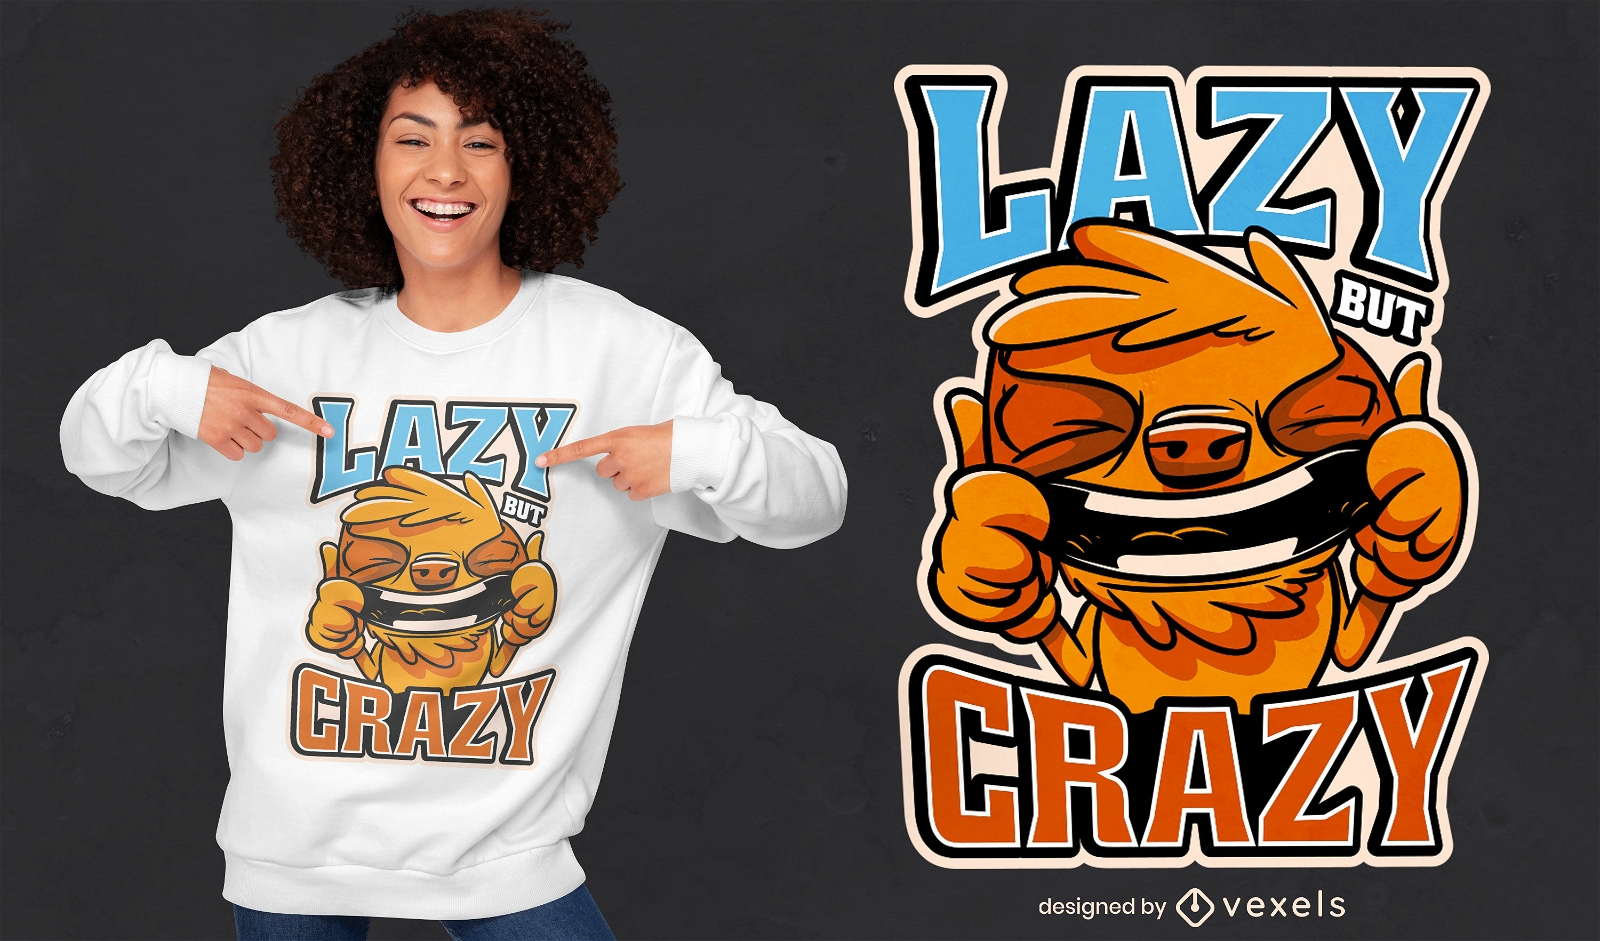 Lazy but crazy sloth t-shirt design